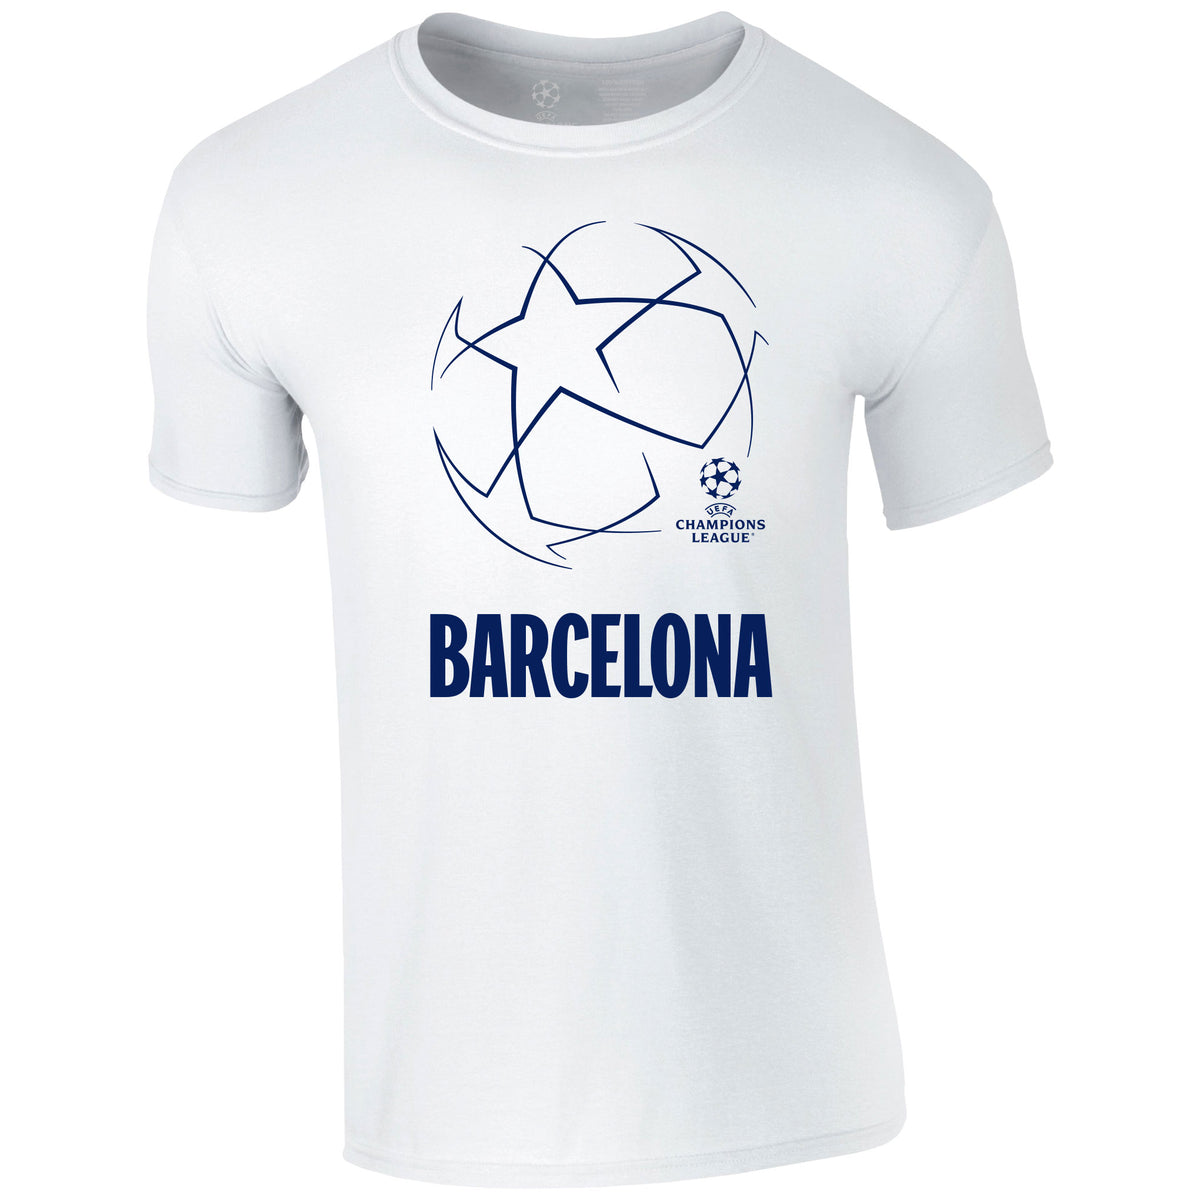 Champions League Starball Barcelona City T-Shirt White